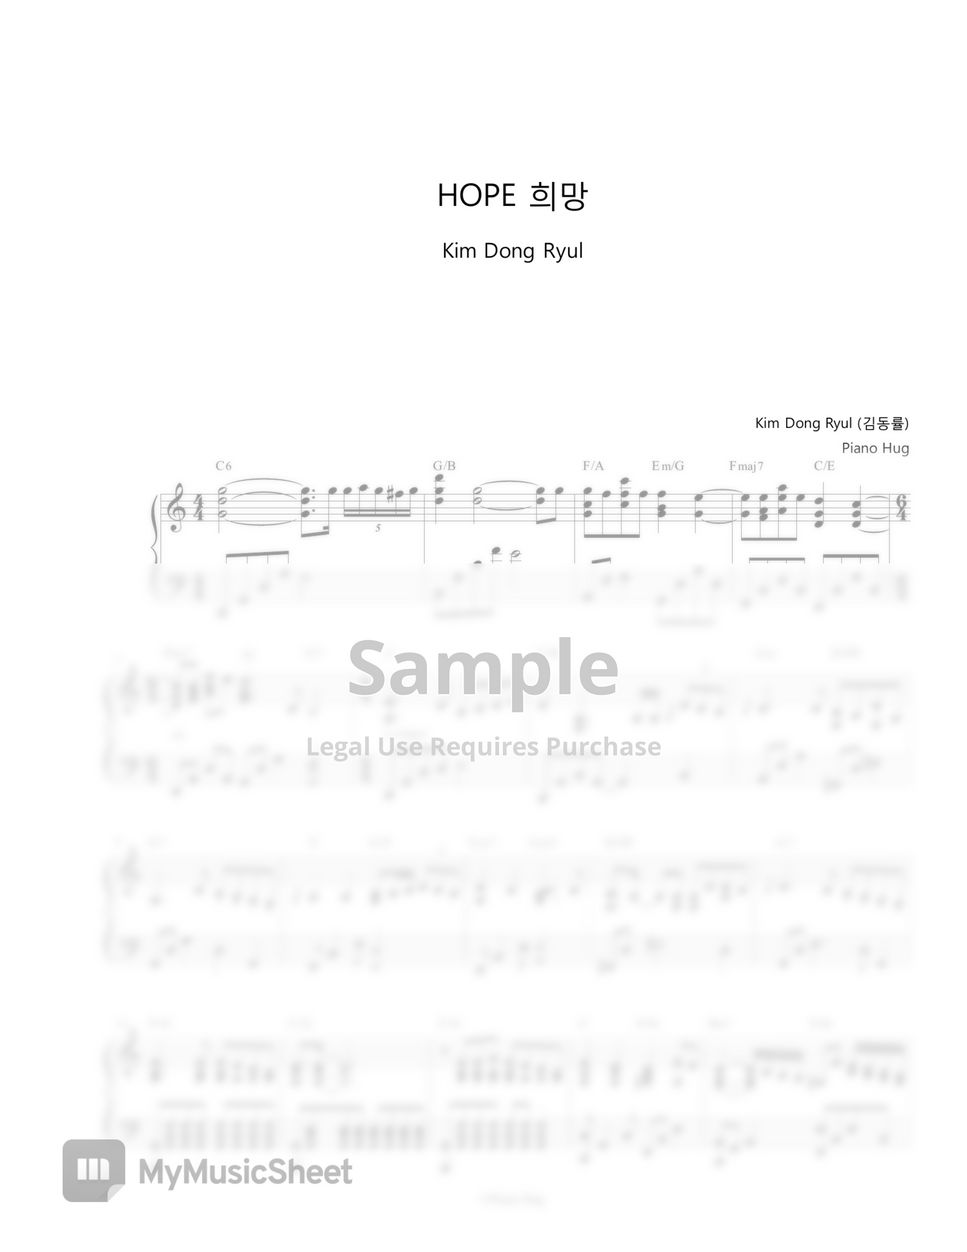 Kim Dong Ryul (김동률) - Hope (희망) by Piano Hug